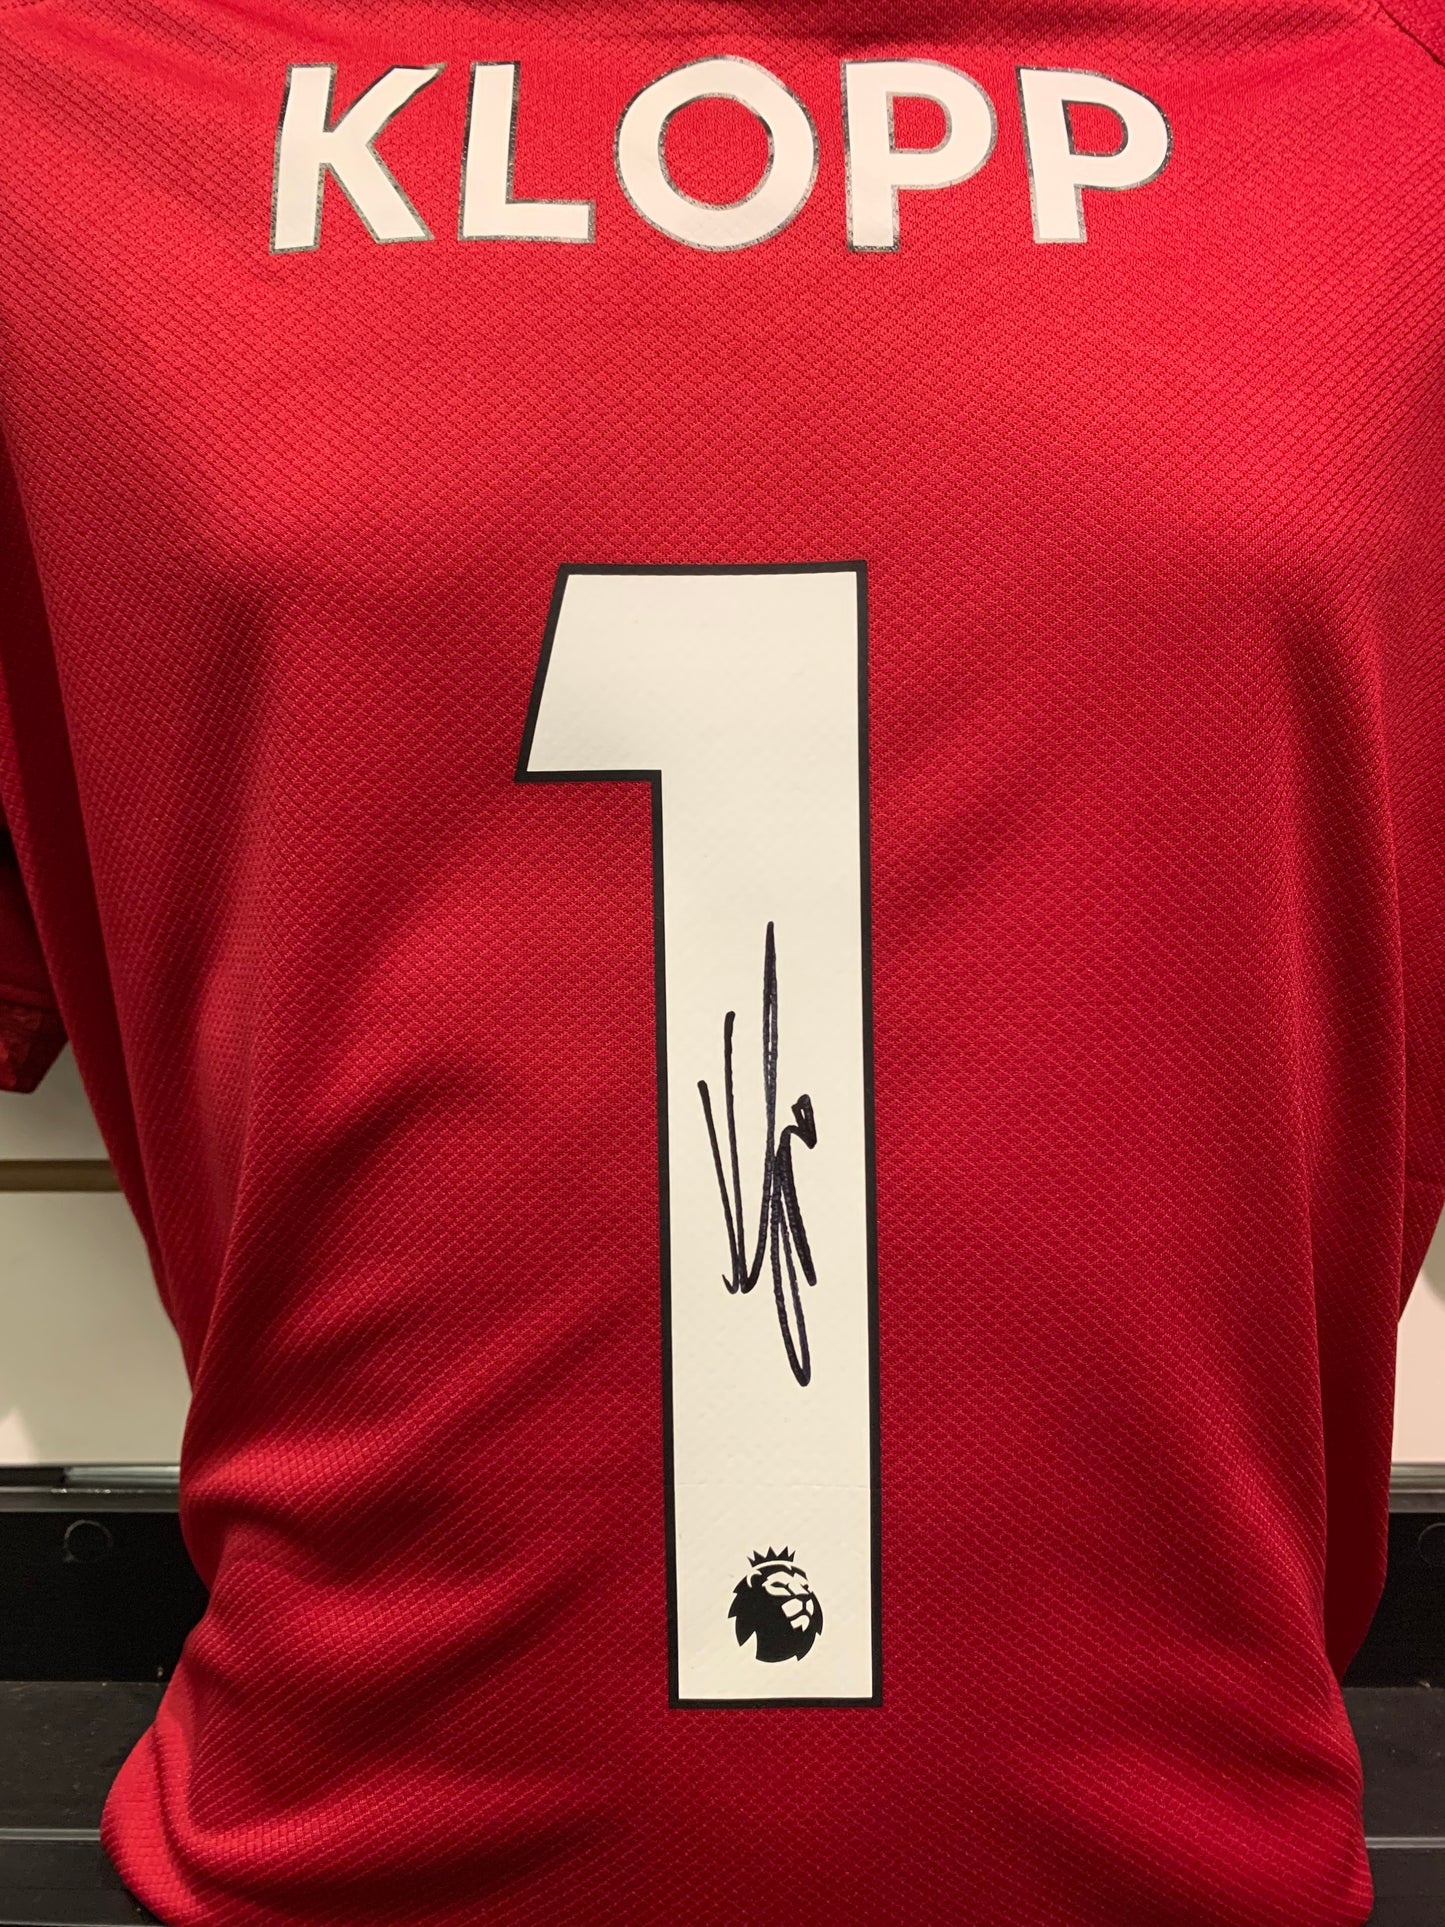 Jurgen Klopp - Liverpool signed replica shirt - LFC, Liverpool memorabilia, gift, (UNFRAMED)